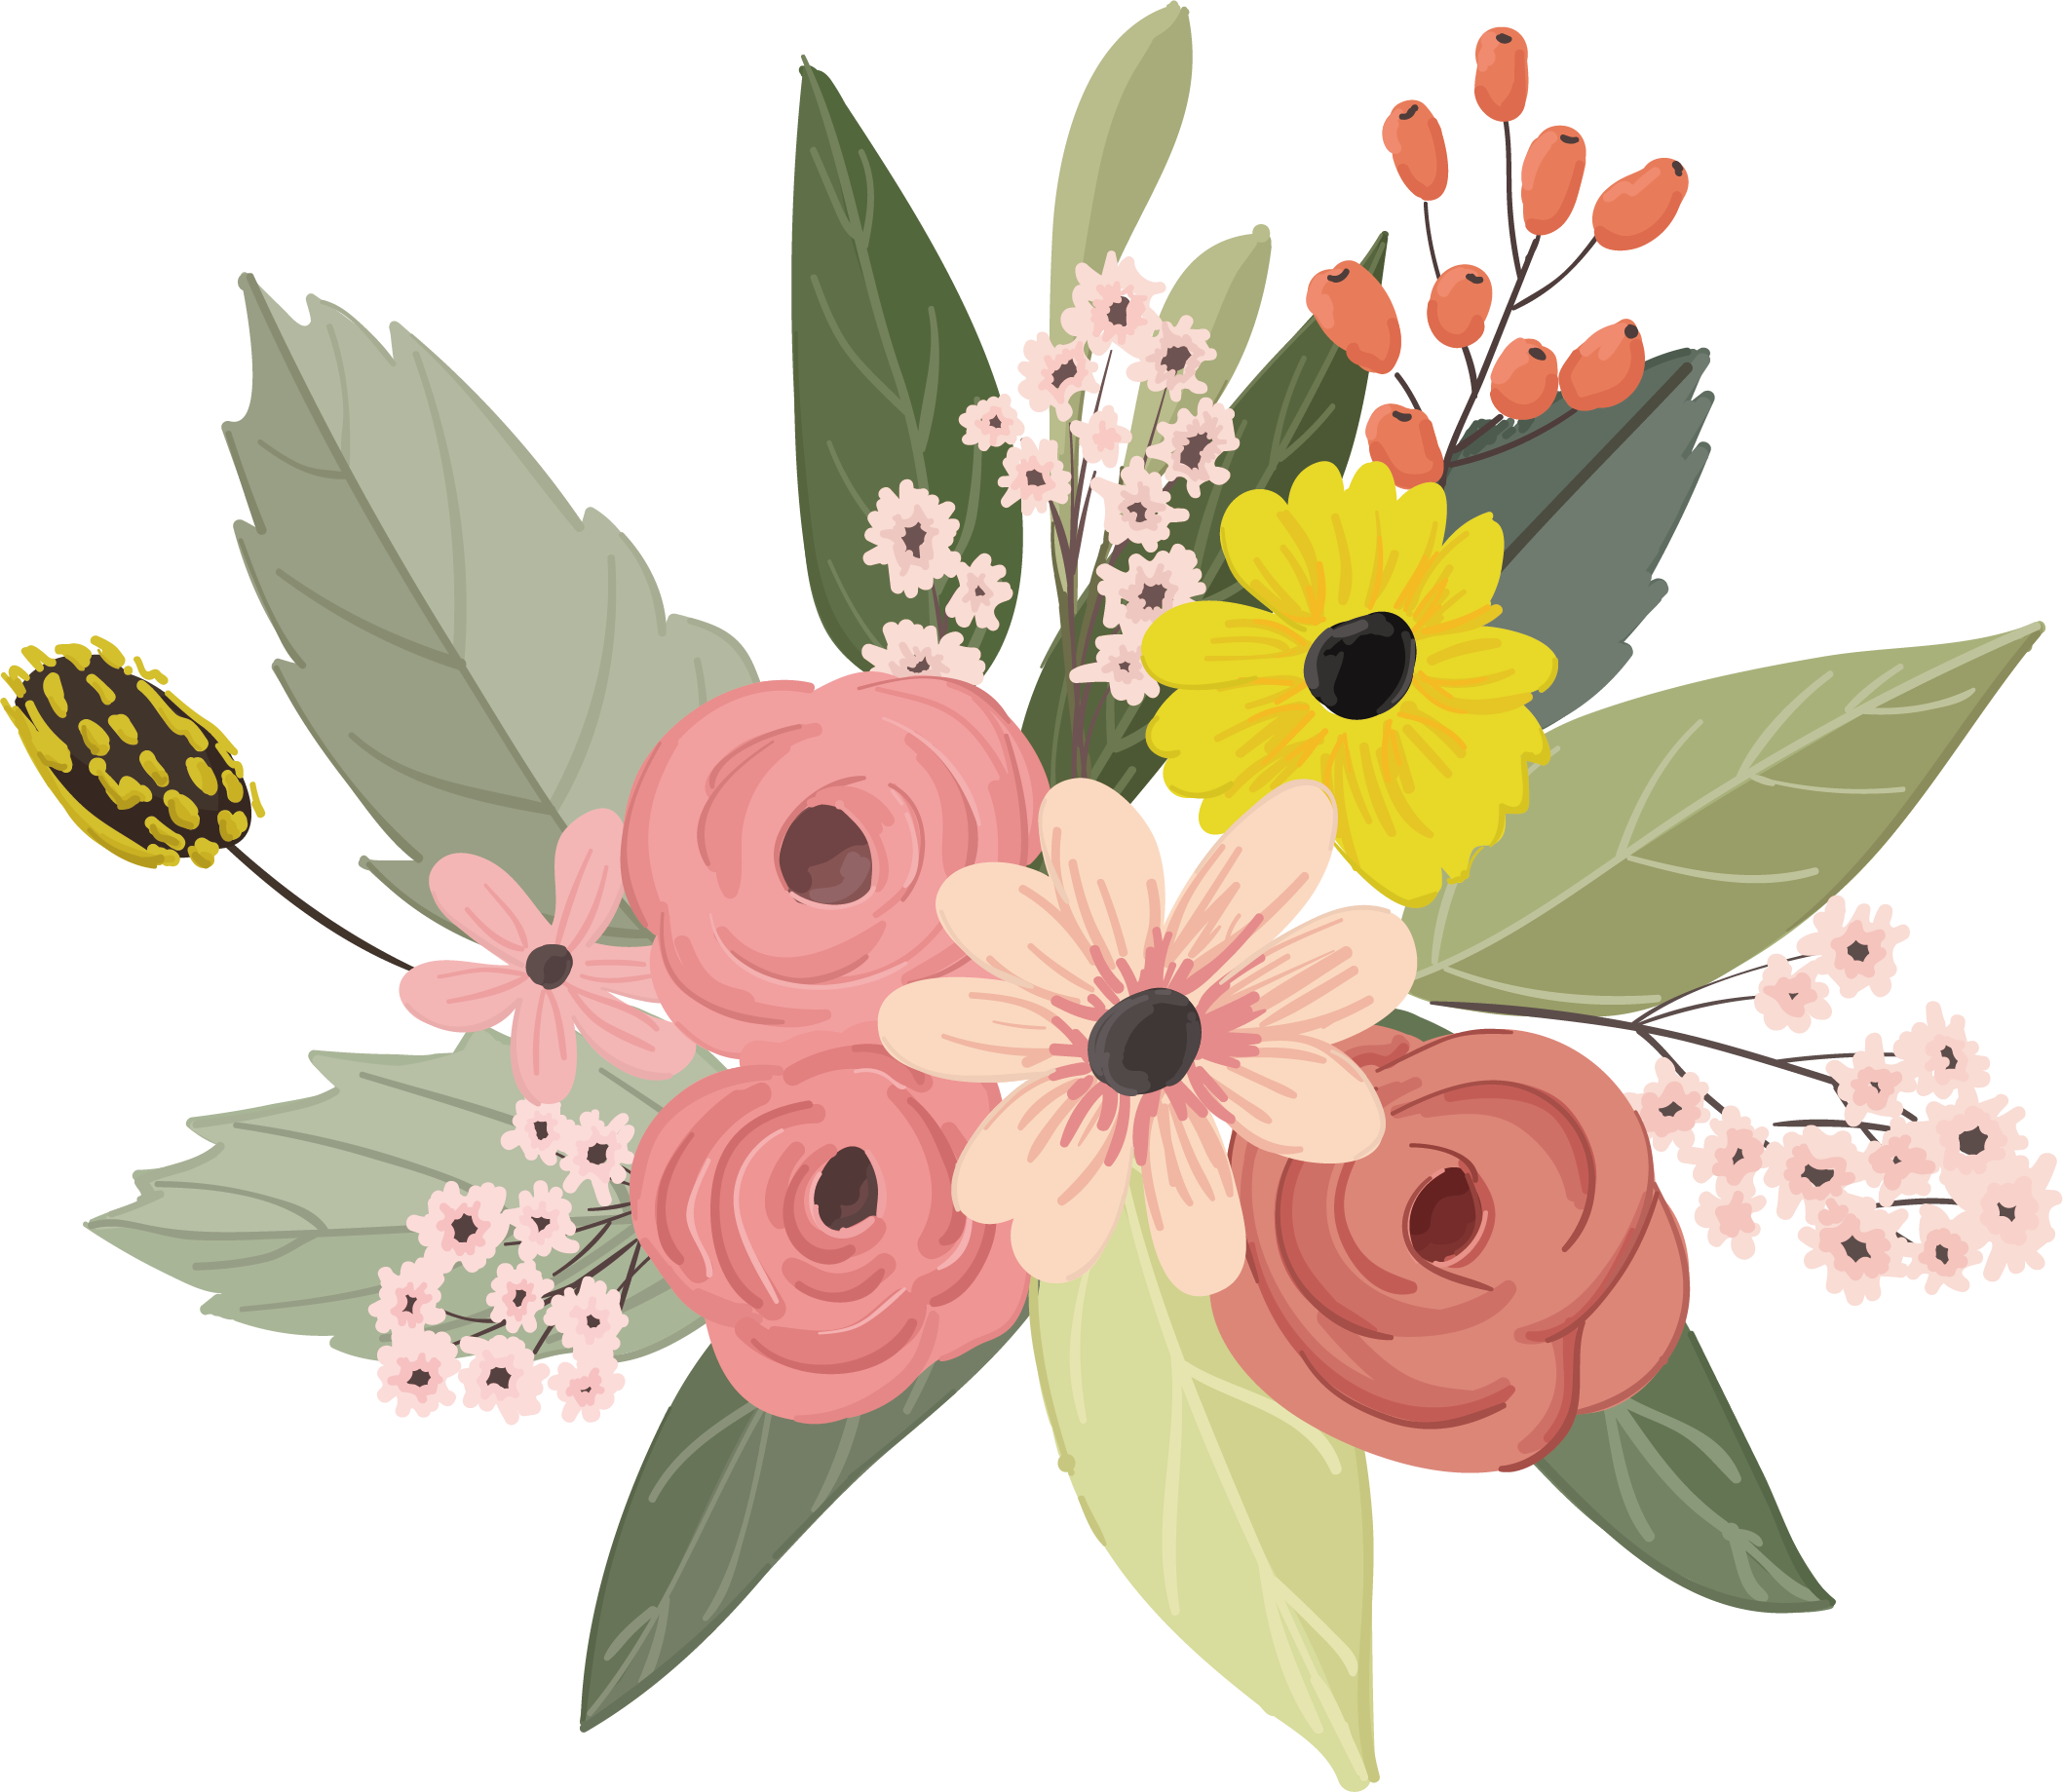 Flower Floral design Watercolor flower vector png download 2117*